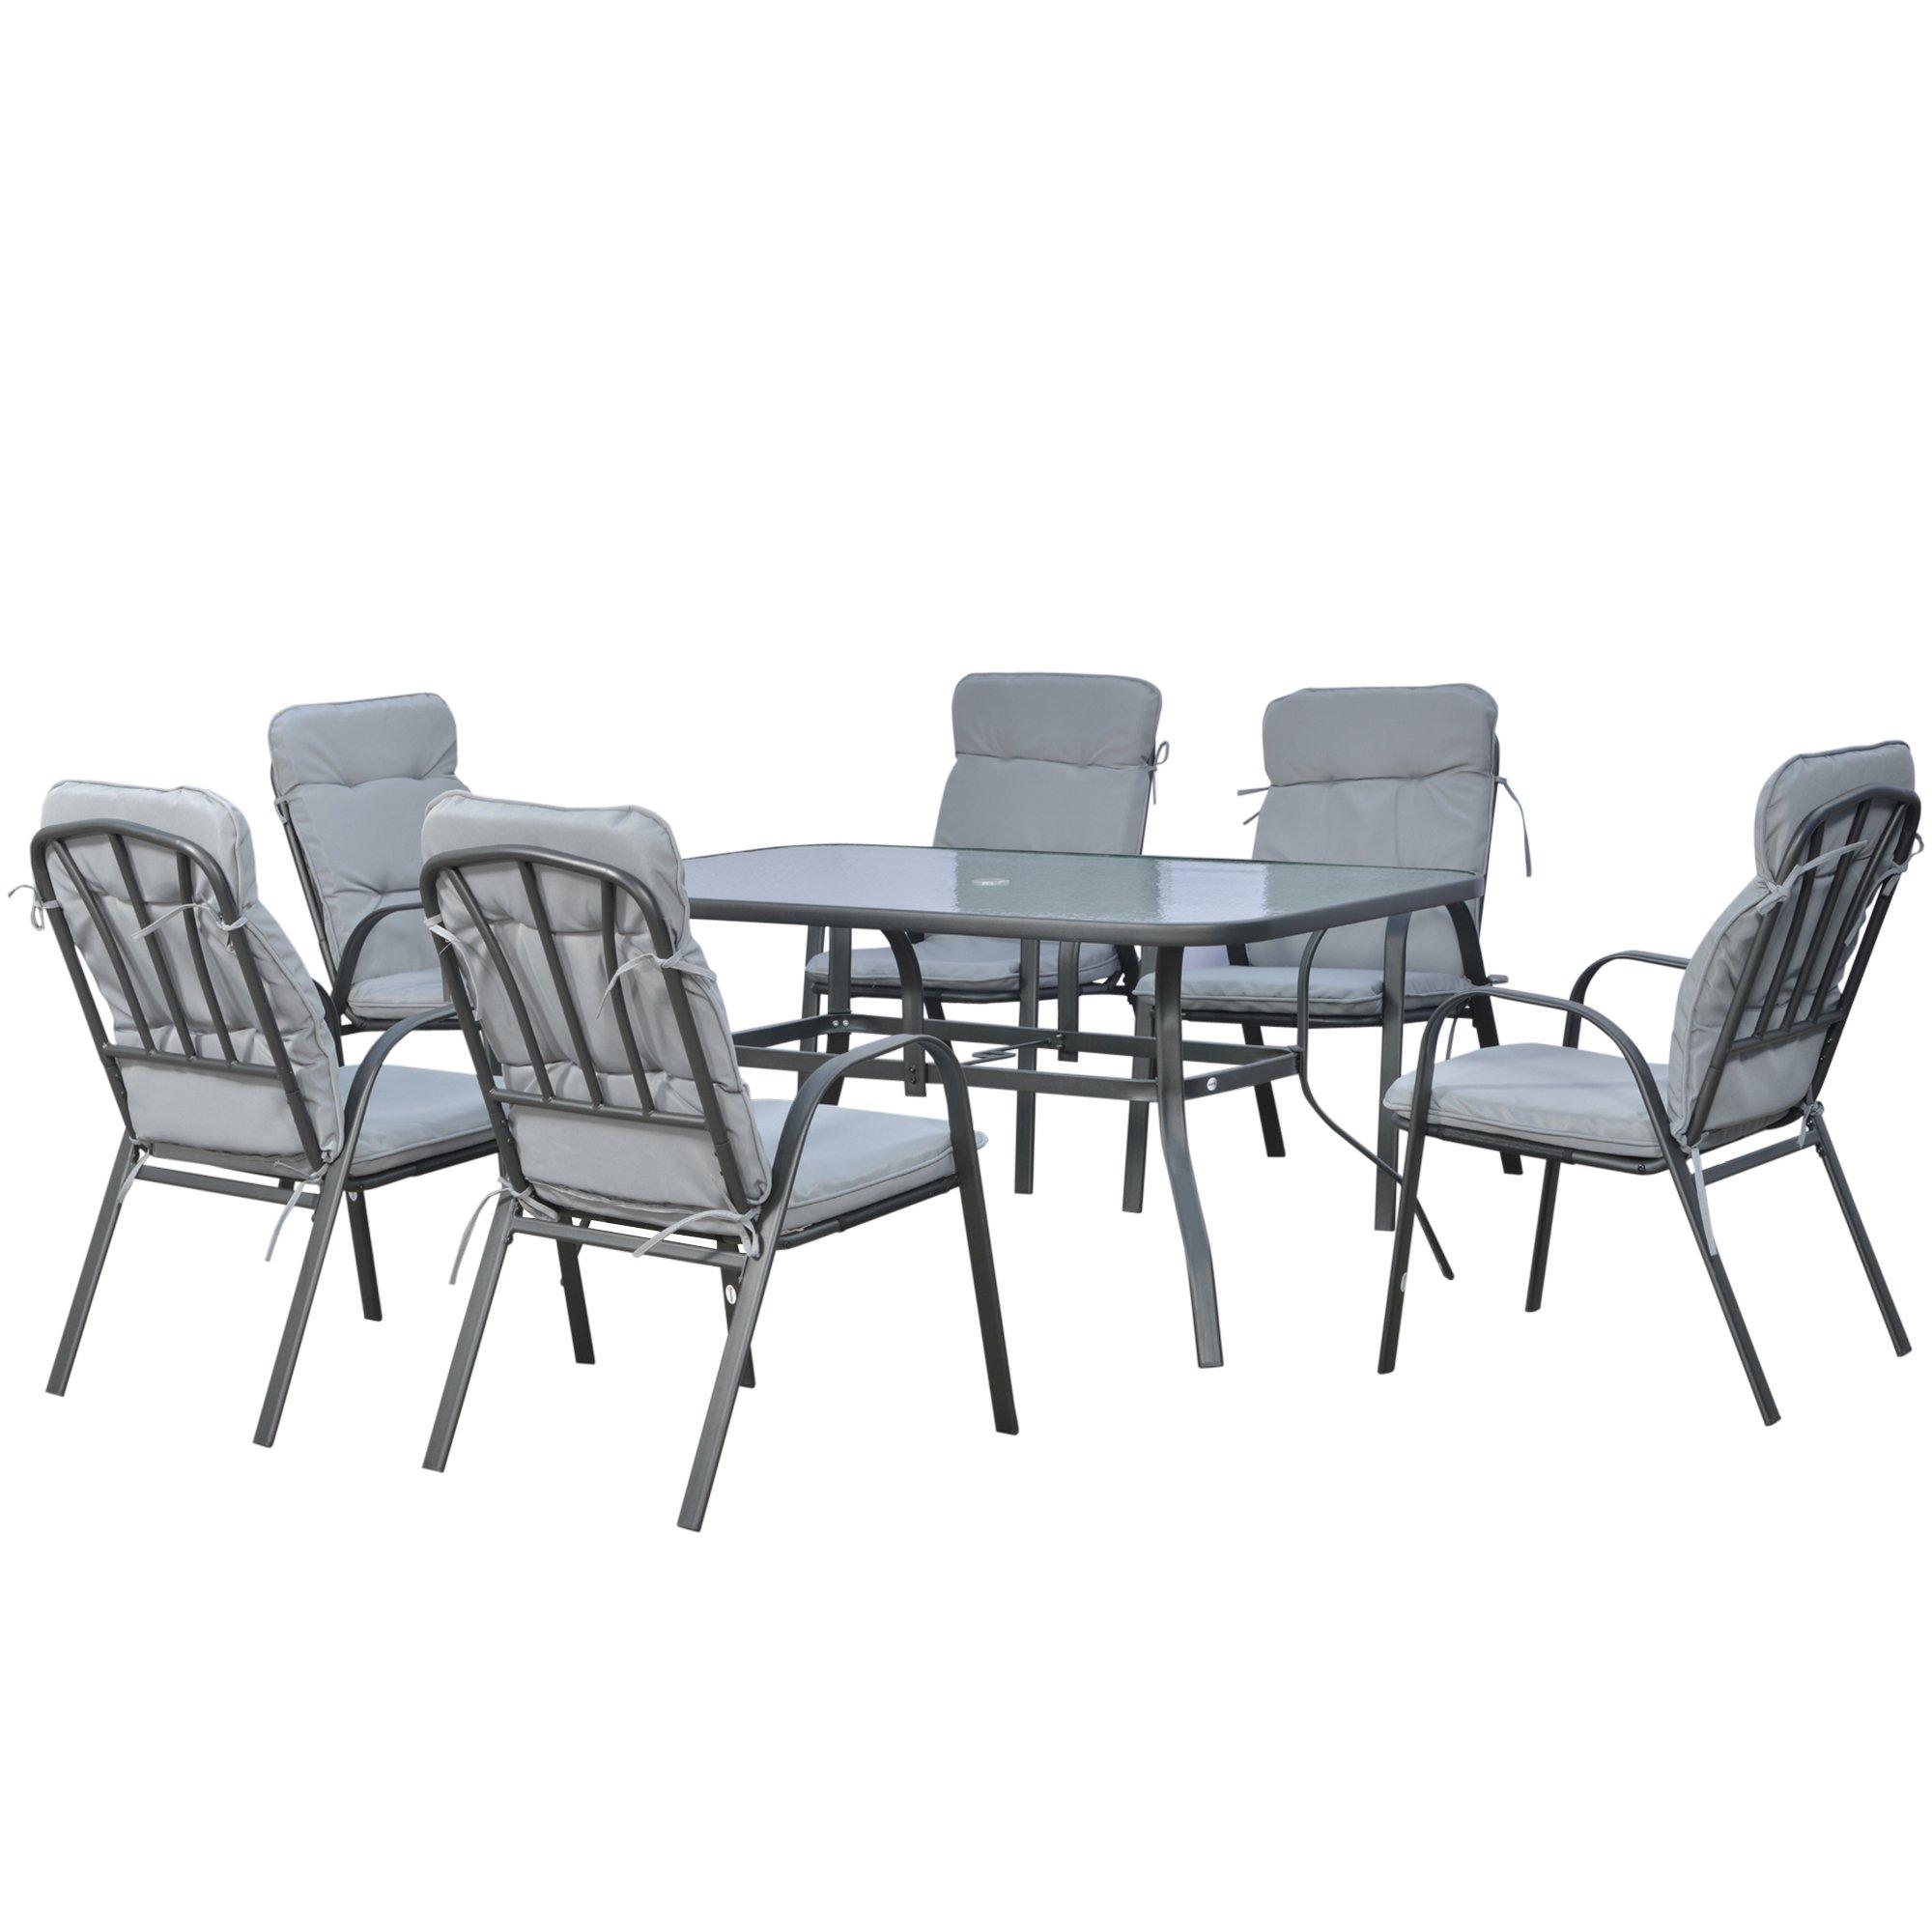 7 PCs Garden Dining Set, Glass Table w/ Umbrella Hole & Cushion